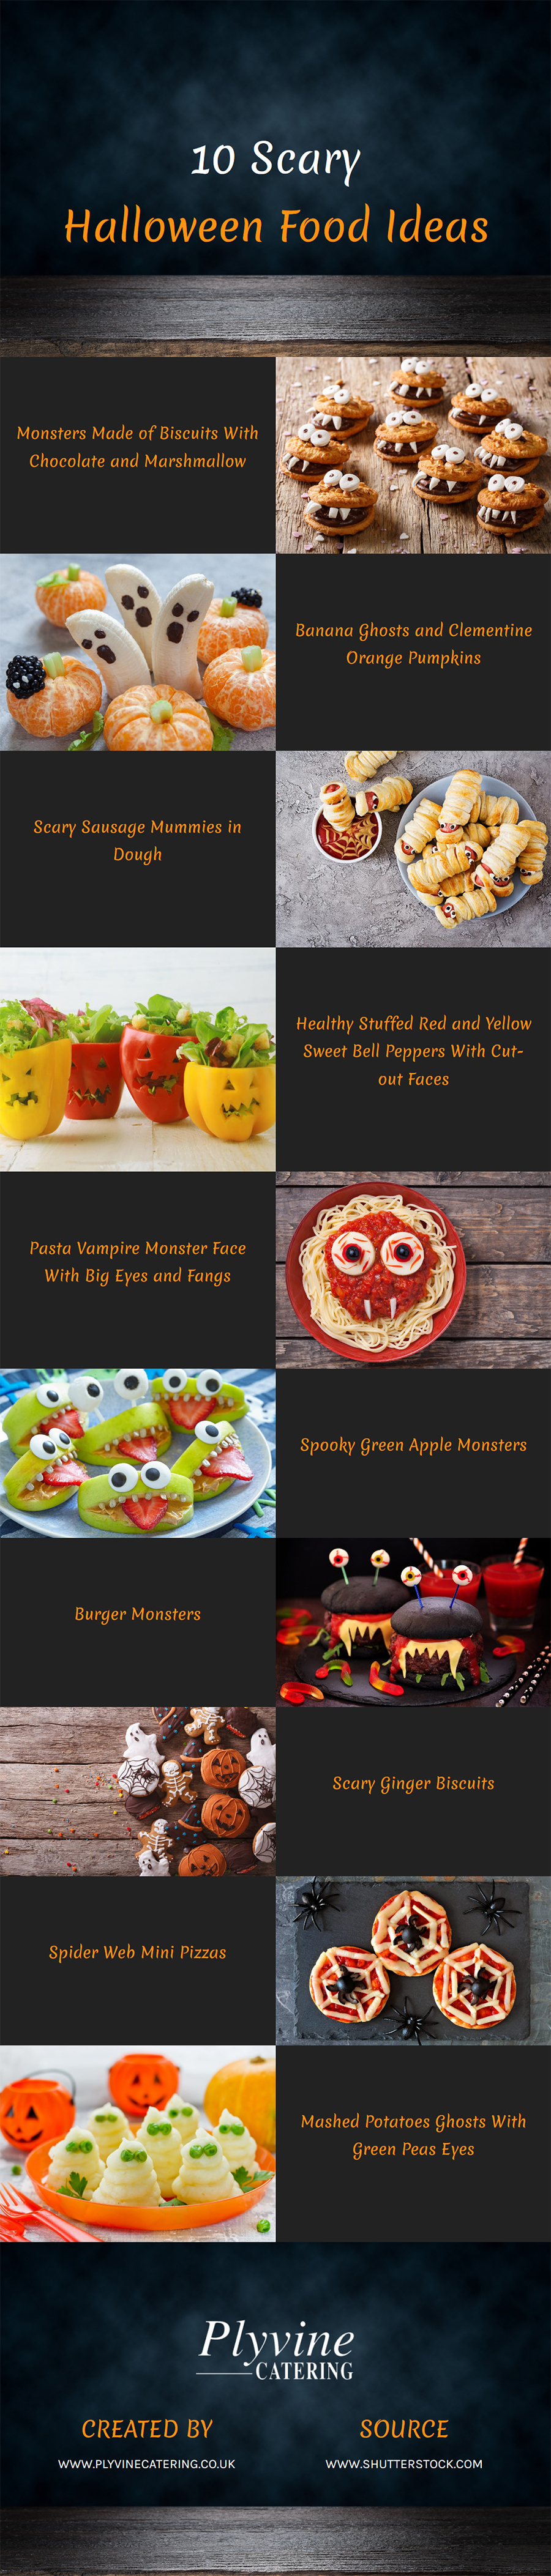 10 Scary Halloween Food Ideas